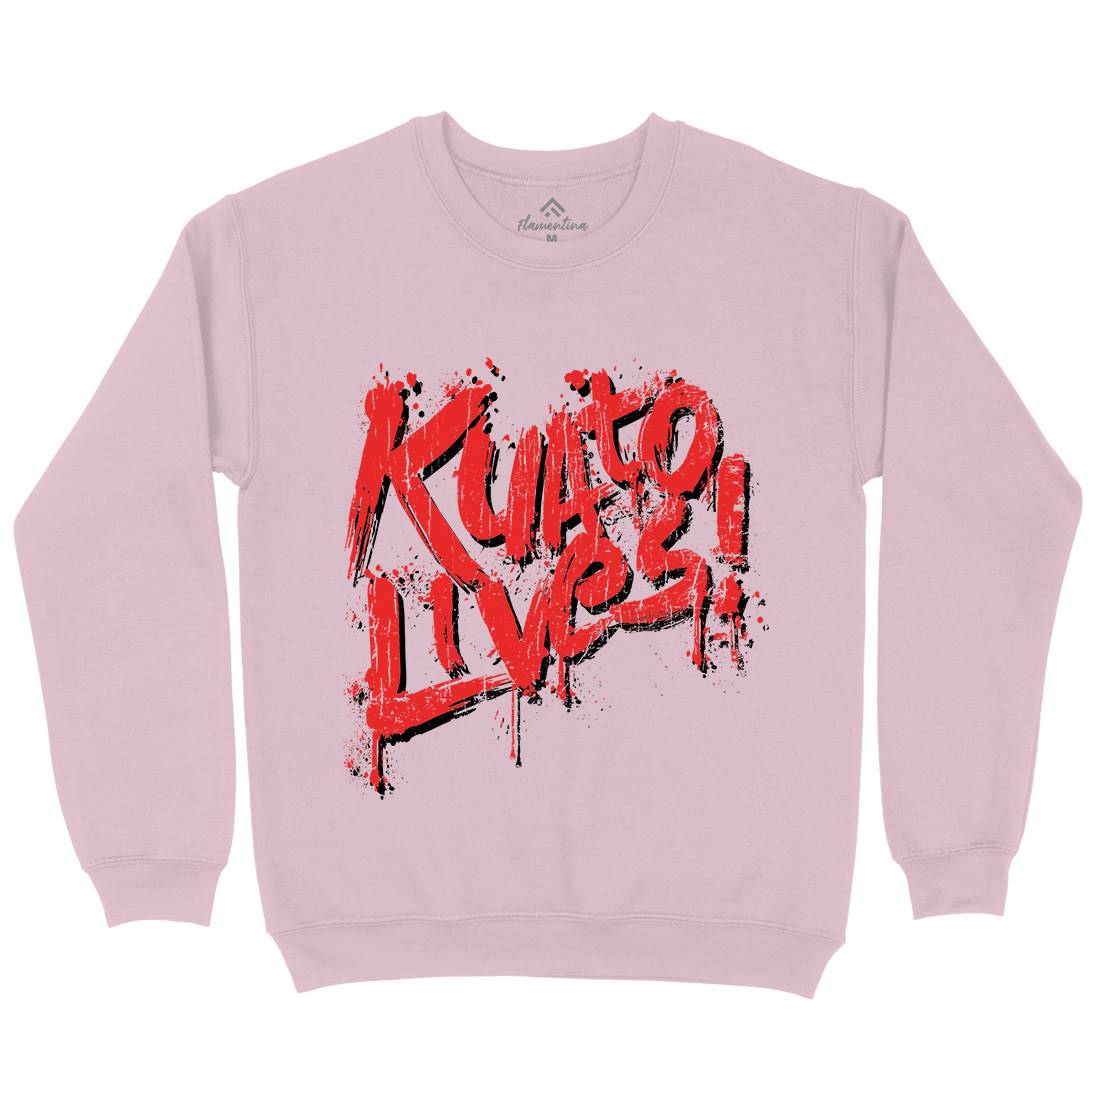 Kuato Lives Kids Crew Neck Sweatshirt Space D249